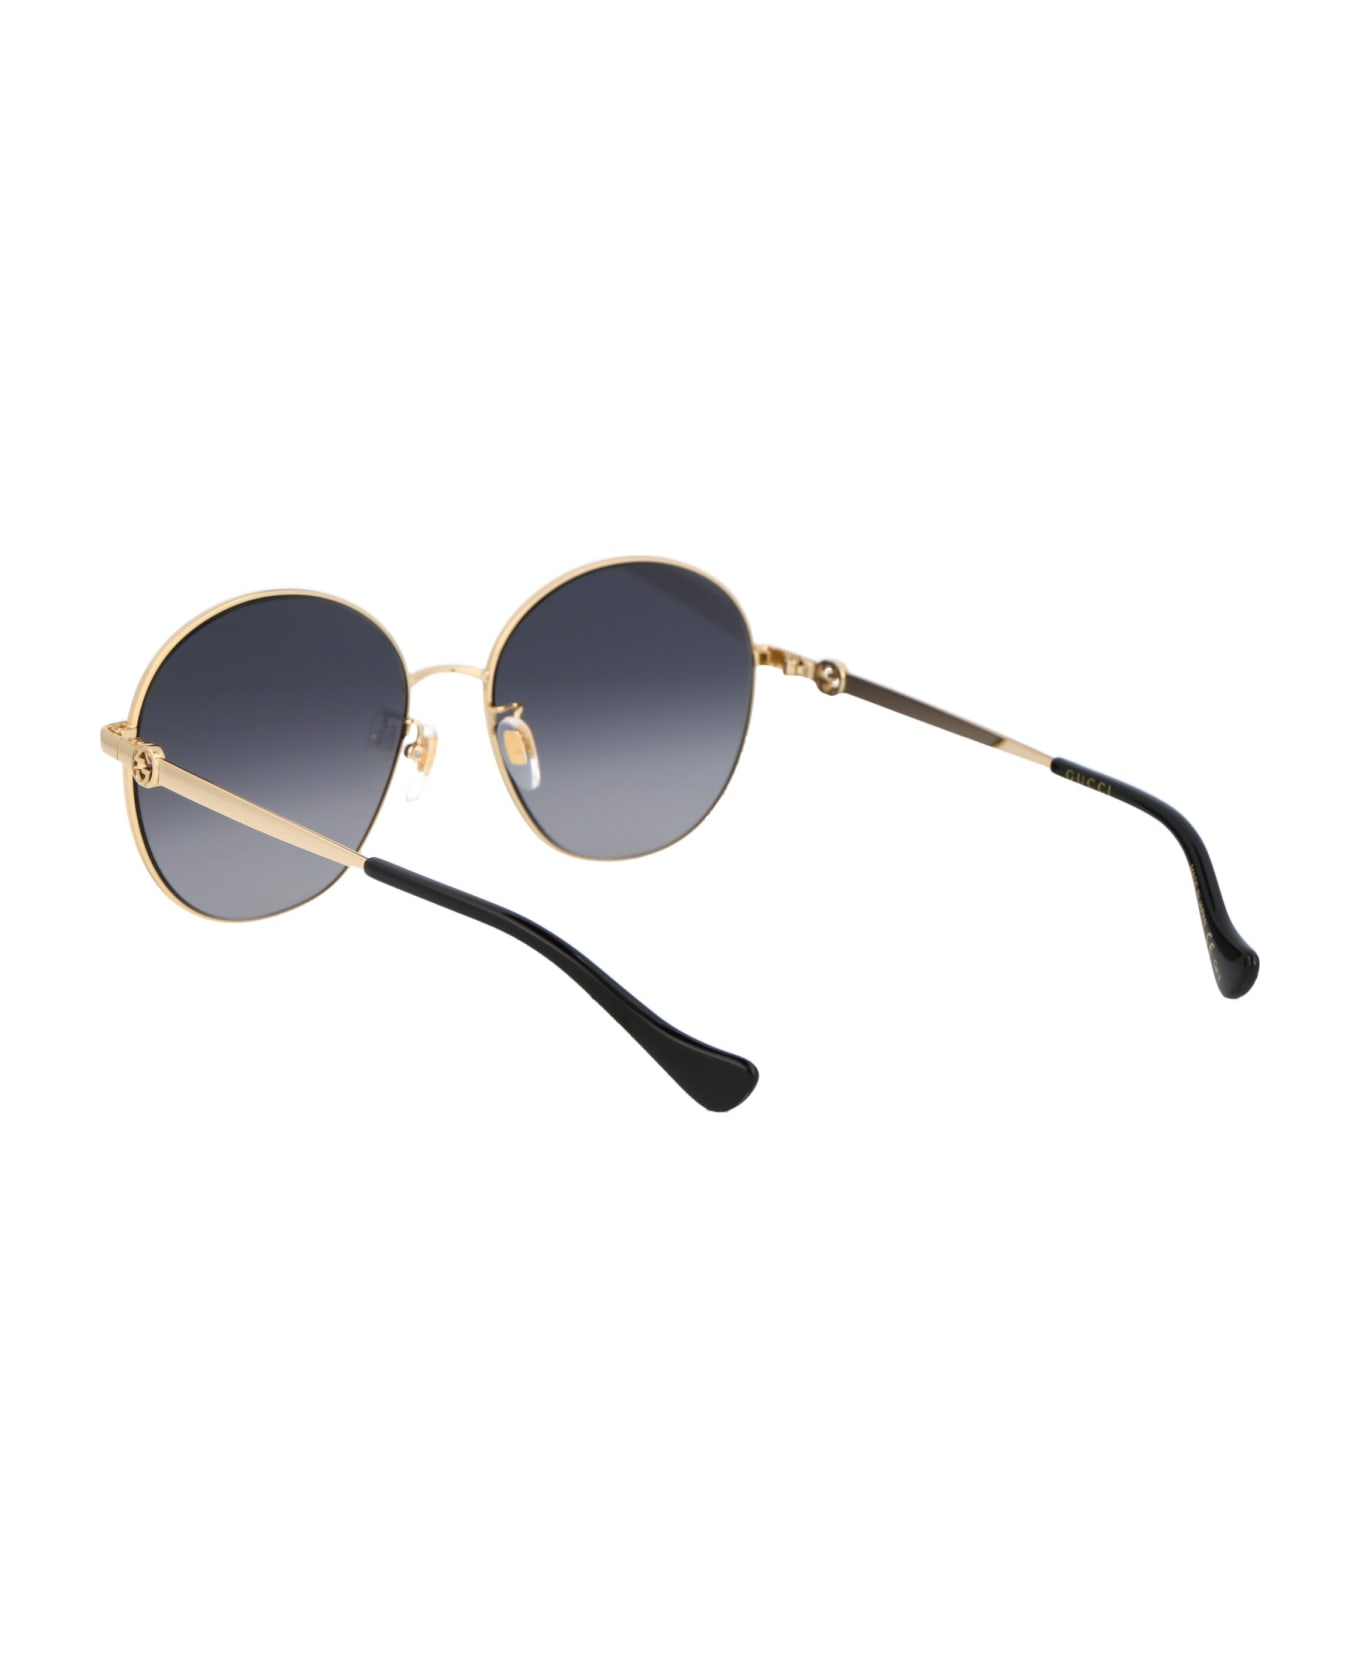 Gucci Eyewear Gg1090sa Sunglasses - 001 GOLD GOLD GREY サングラス